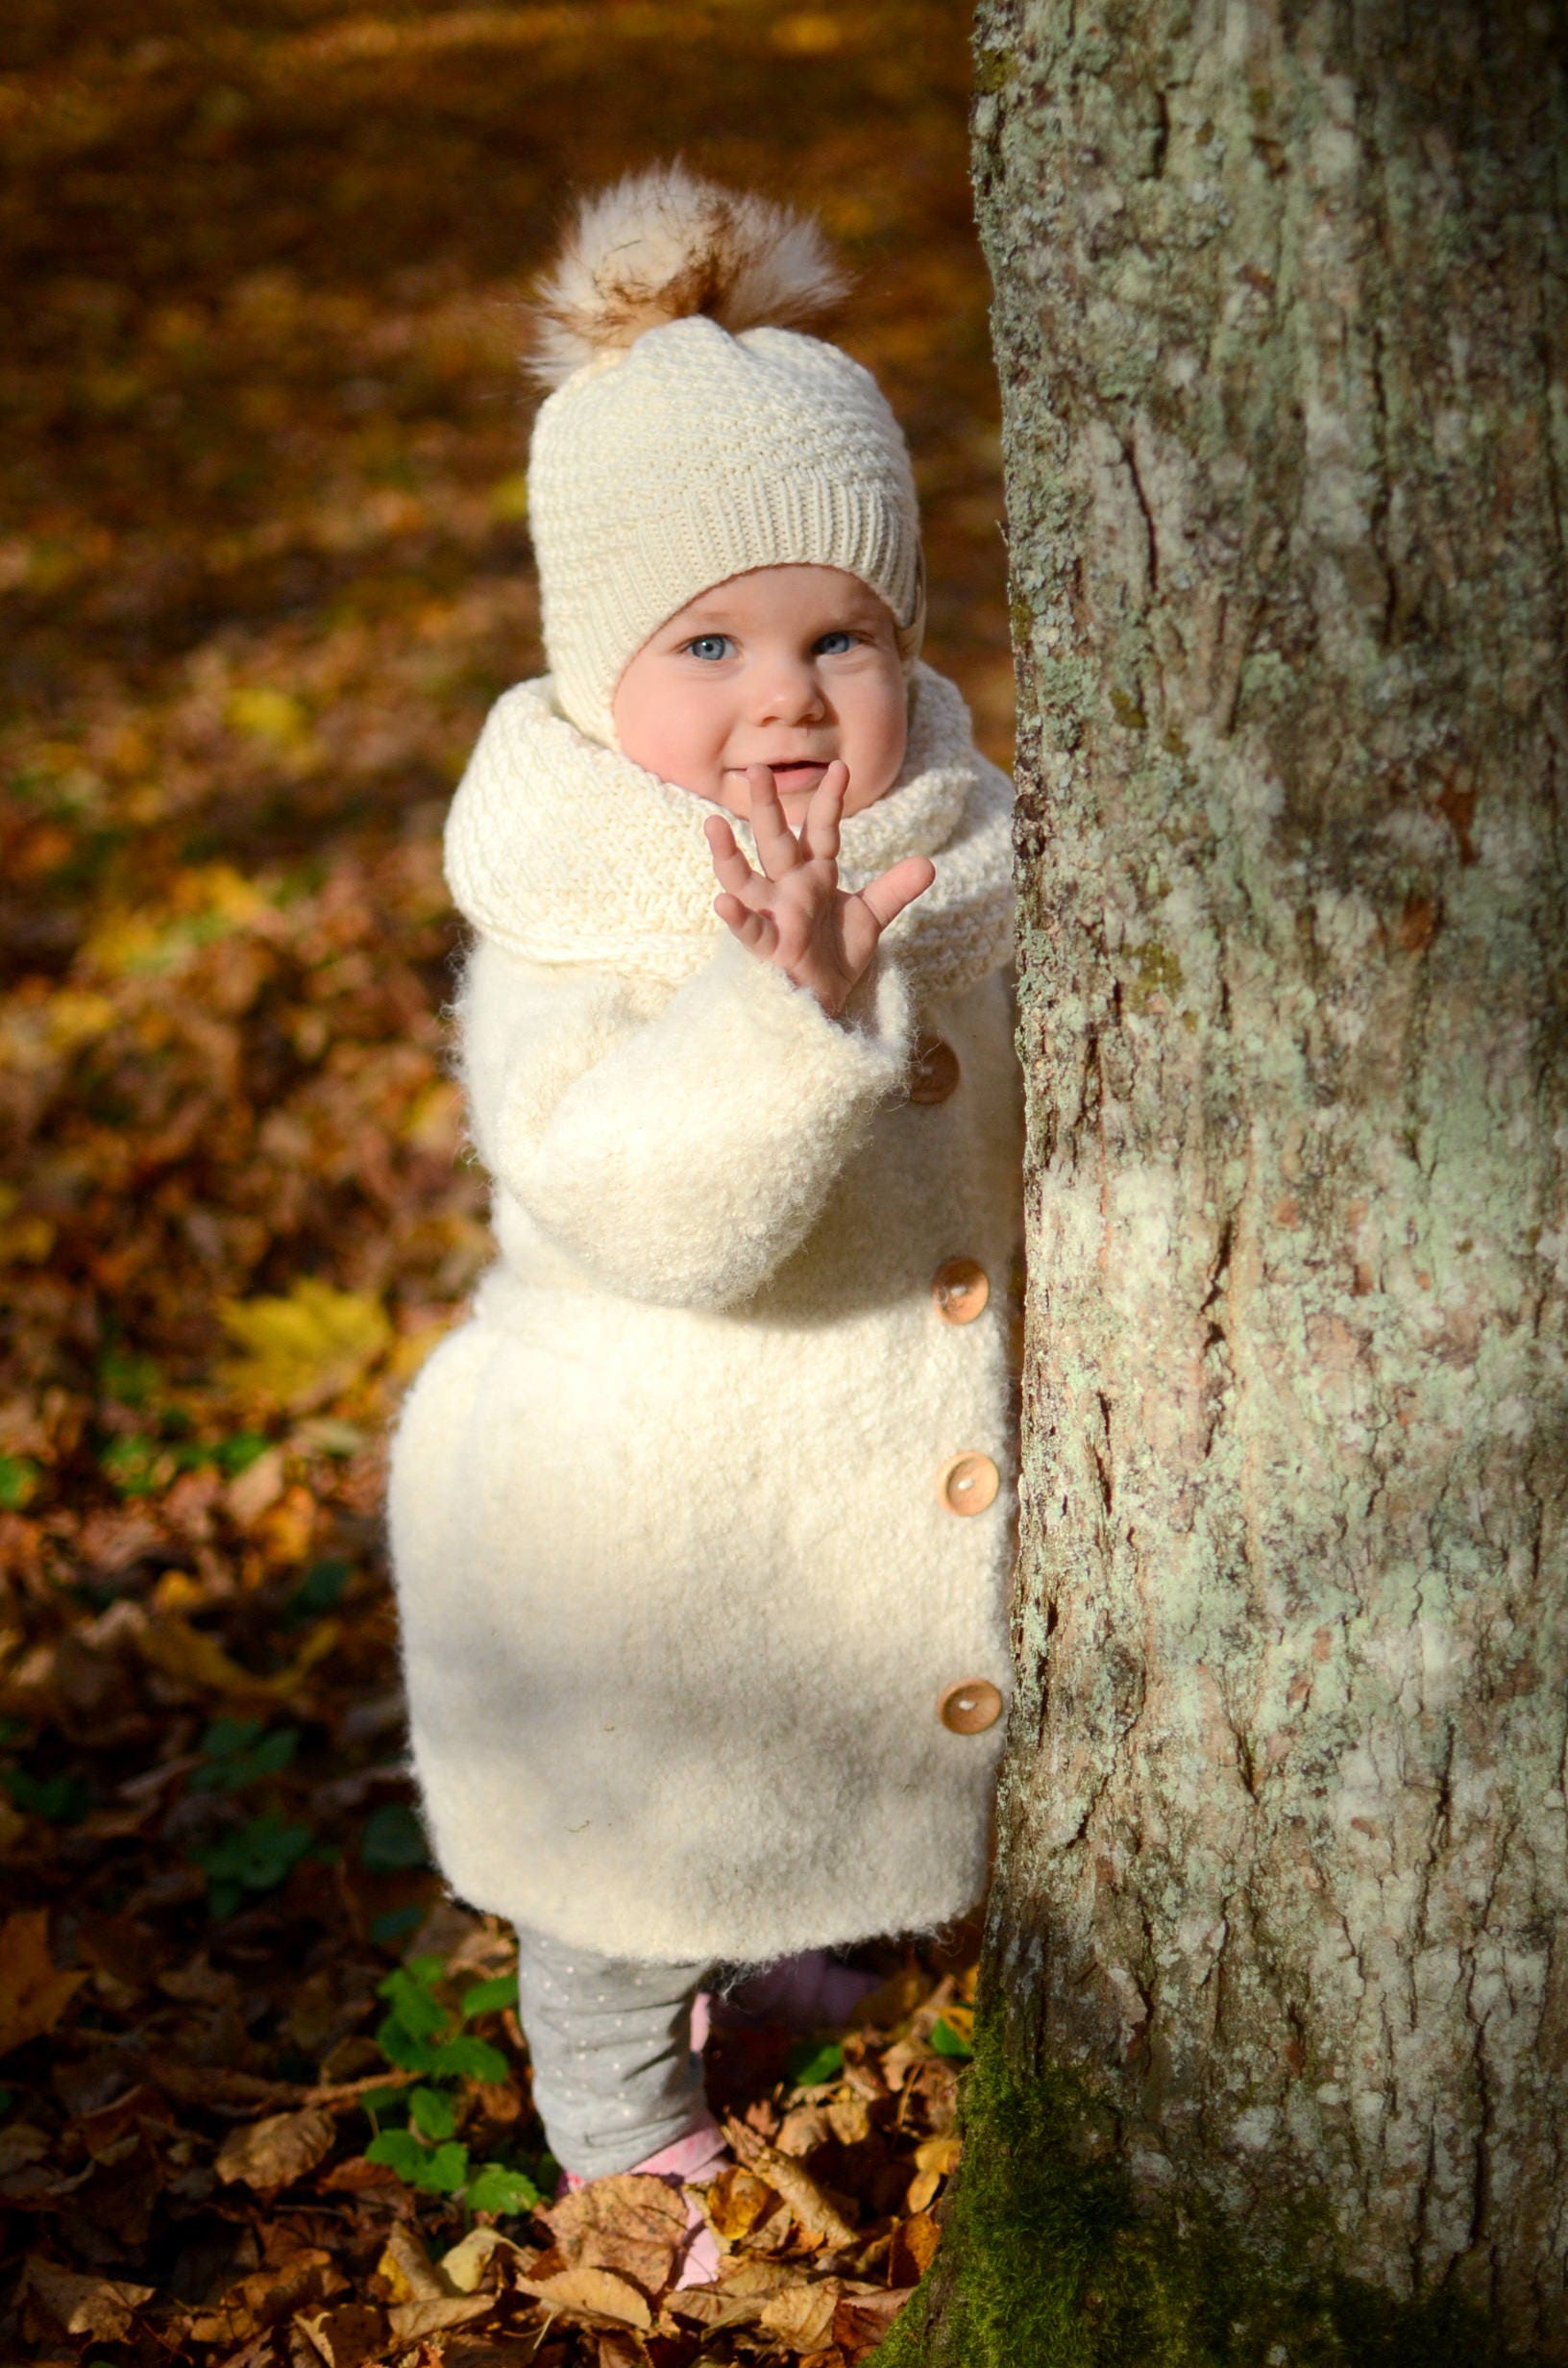 Cute Bunny Ears Baby Hat Autumn Winter Warm Faux Fur Infant Beanie